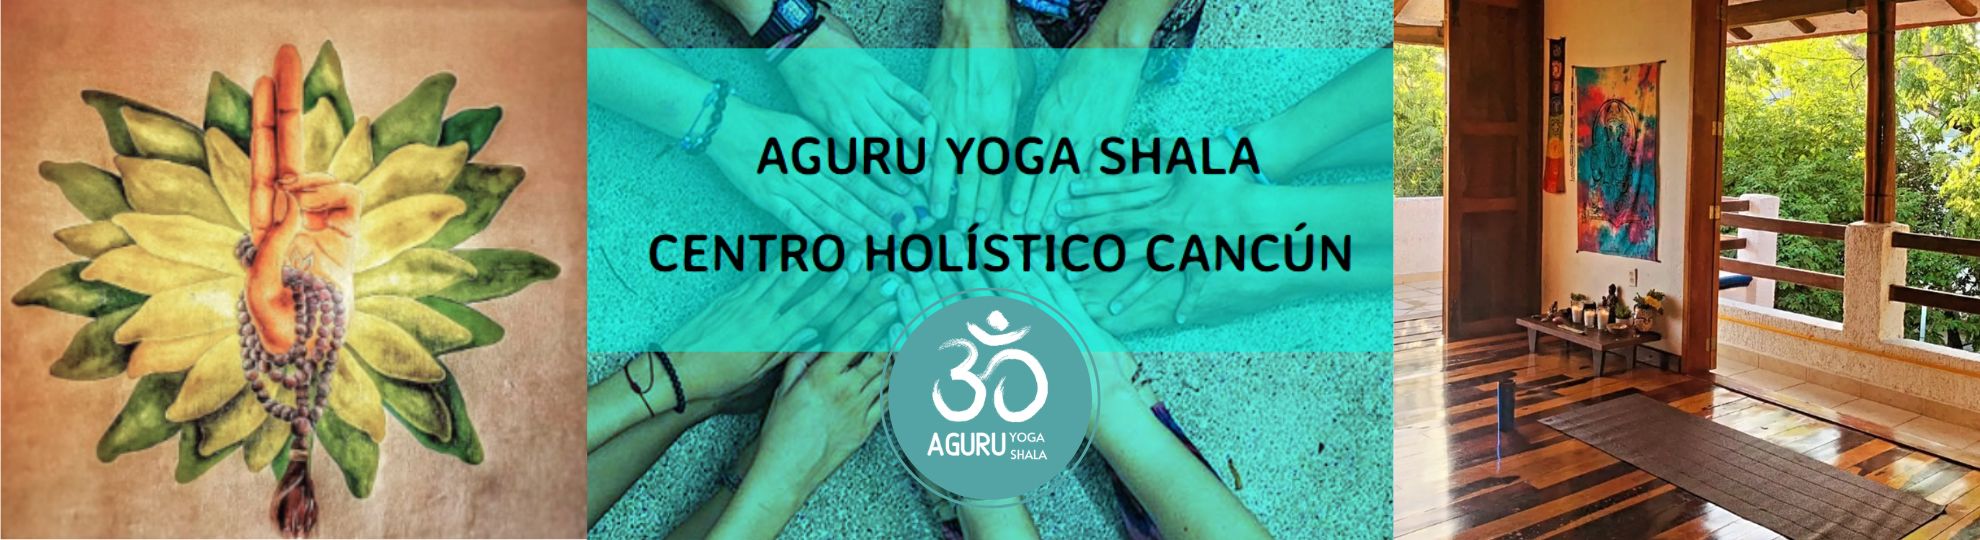 Aguru Yoga Shala Cancun México - CENTRO HOLISTICO DE YOGA Y MEDITACION